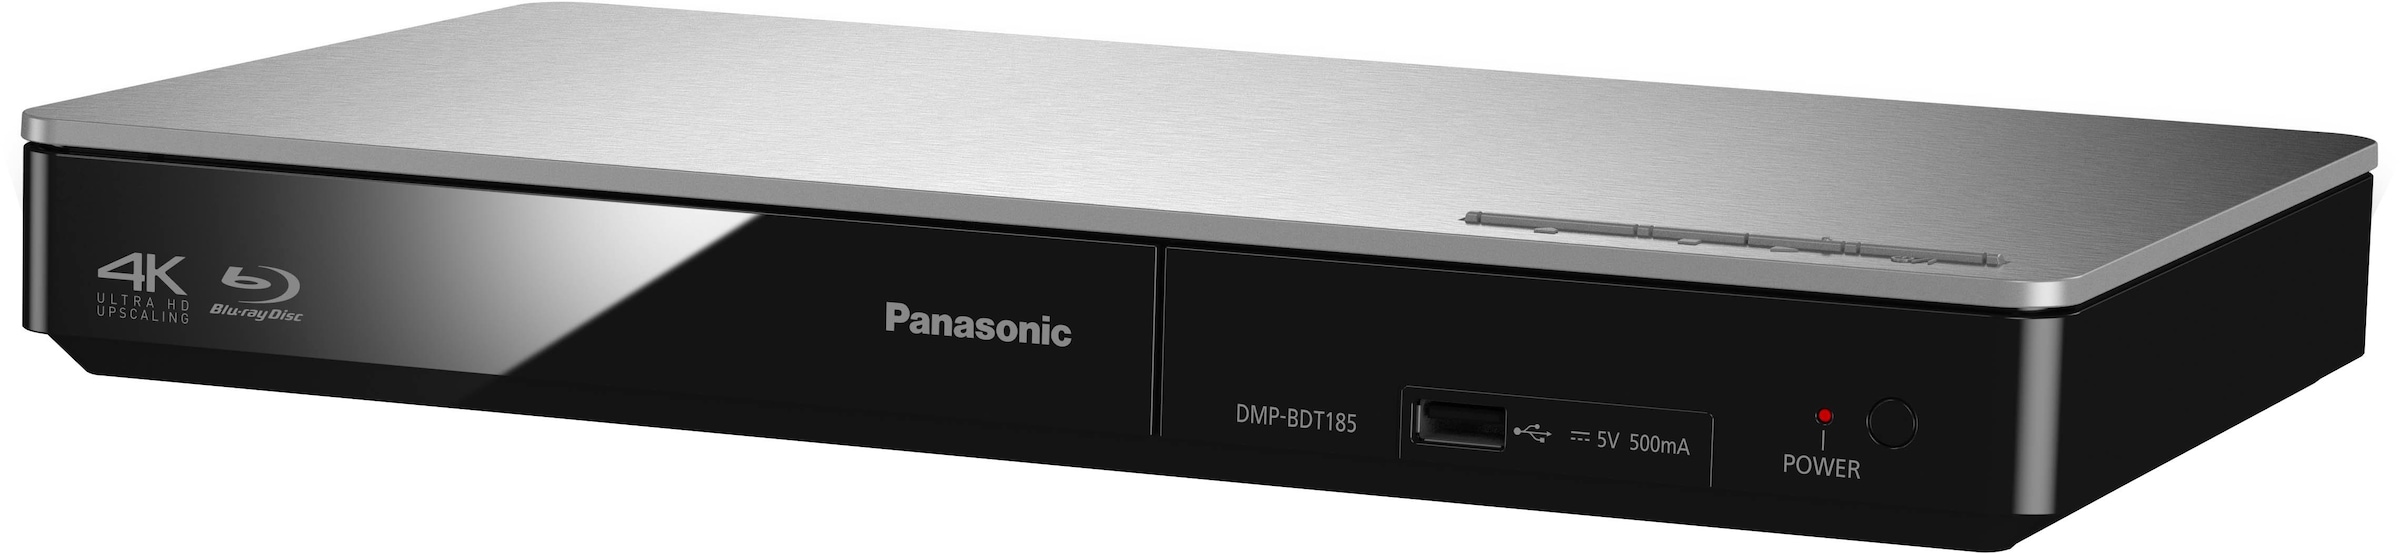 im (Ethernet), Blu-ray-Player DMP-BDT185«, Jelmoli-Online Panasonic Shop 4K LAN Upscaling-Schnellstart-Modus ❤ kaufen »DMP-BDT184 /